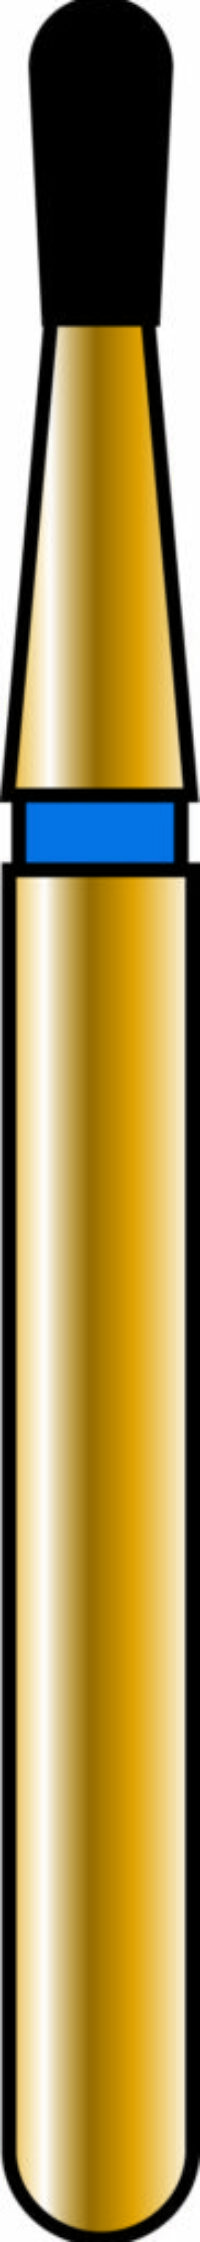 Pear 12-2.7mm Gold Diamond Bur